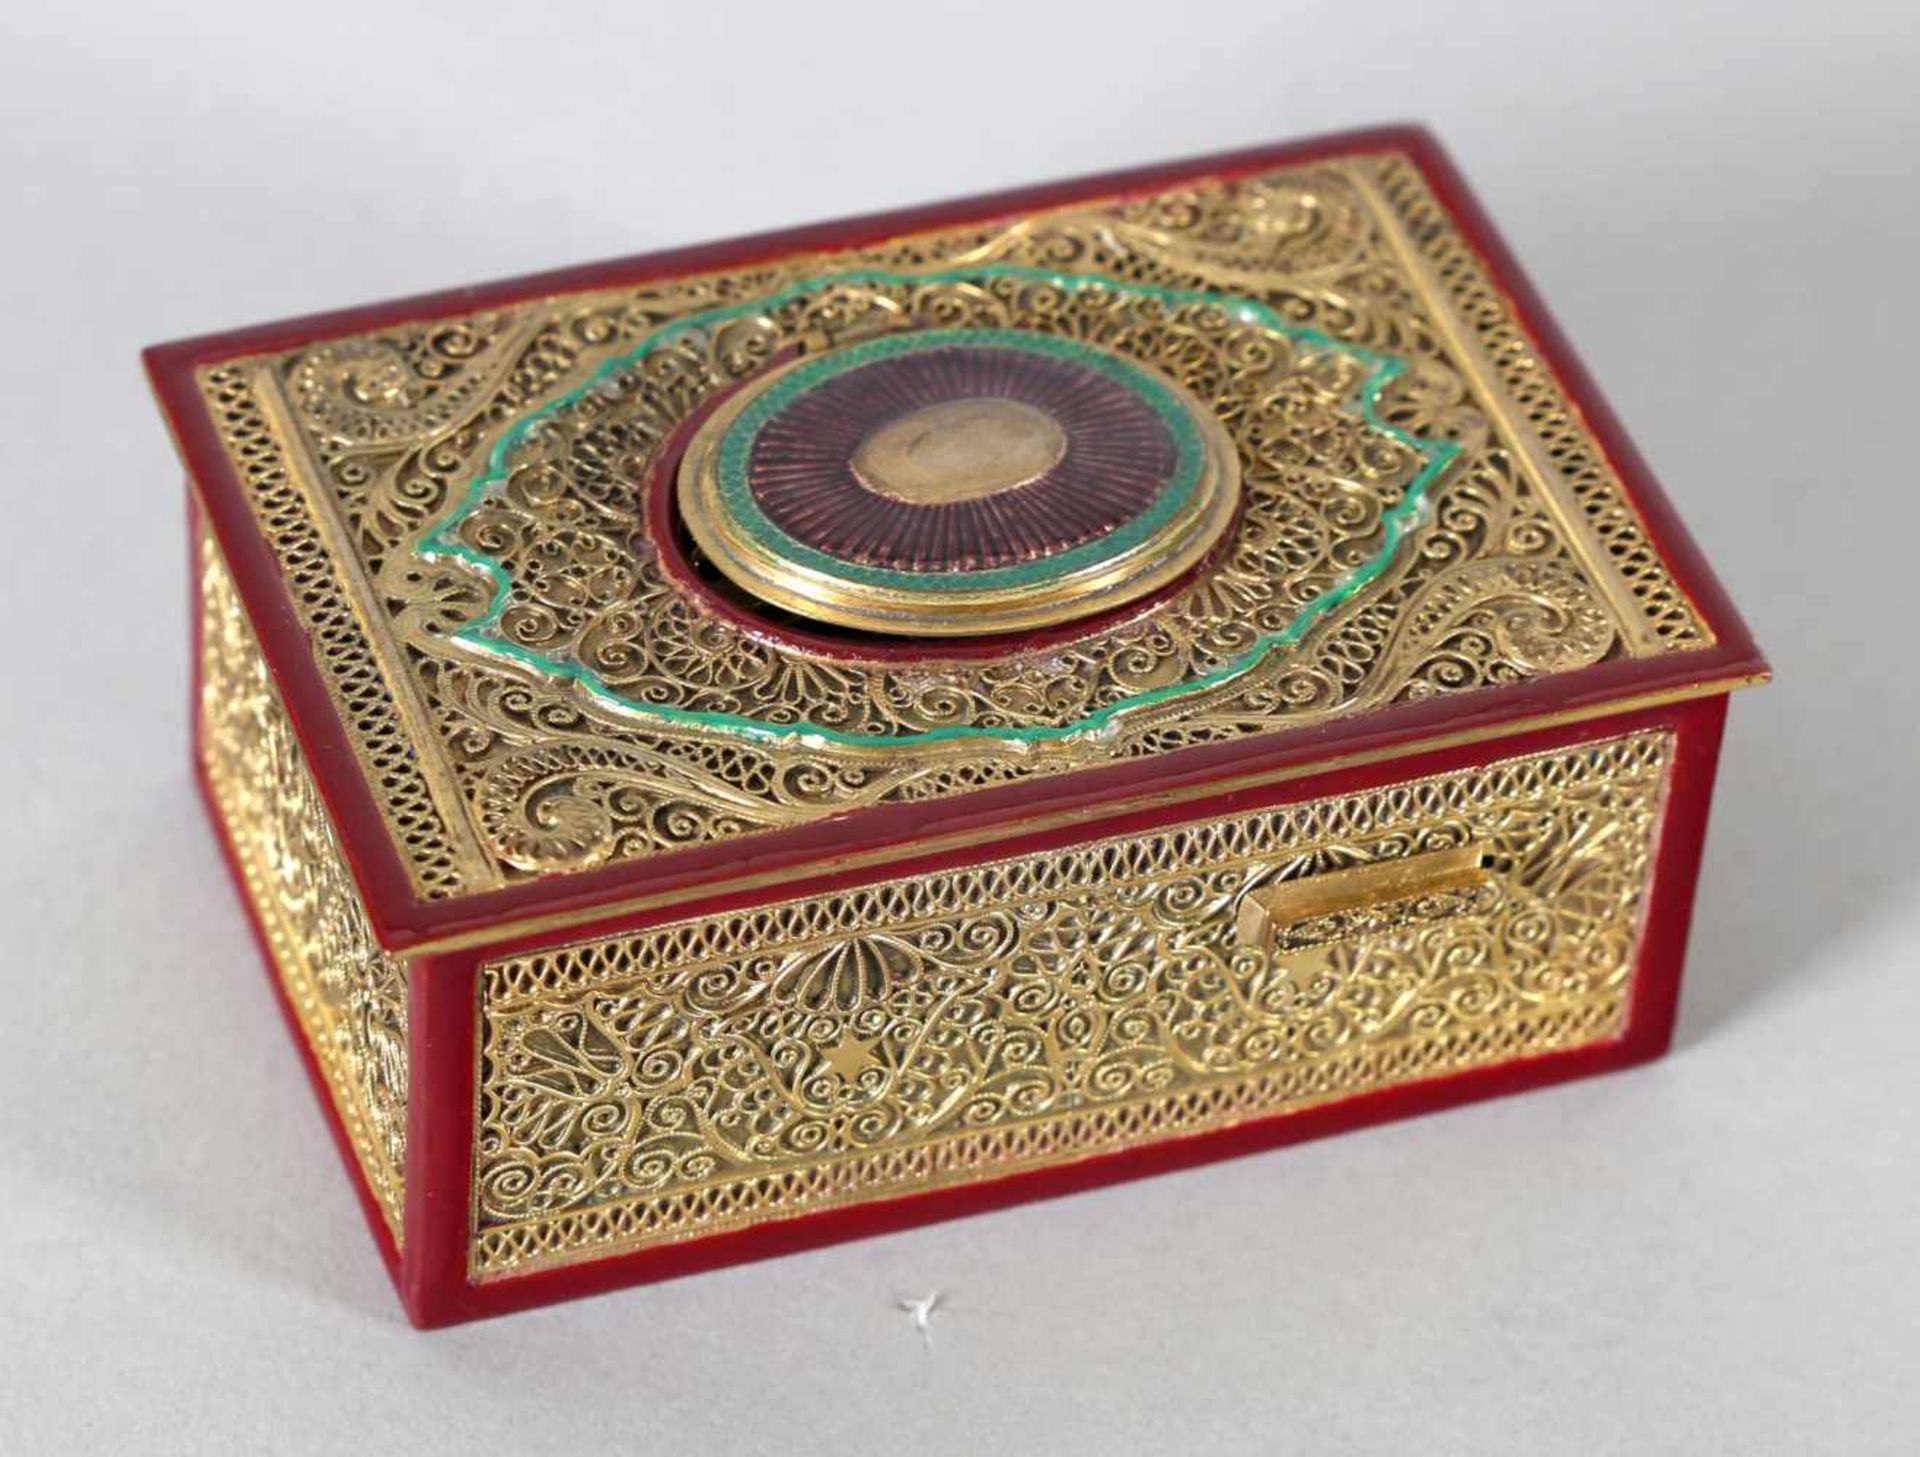 Spieldose mit Singvogel, Paris. wohl um 1900Gehäuse aus Messing vergoldet mit filigranem aufgelegtem